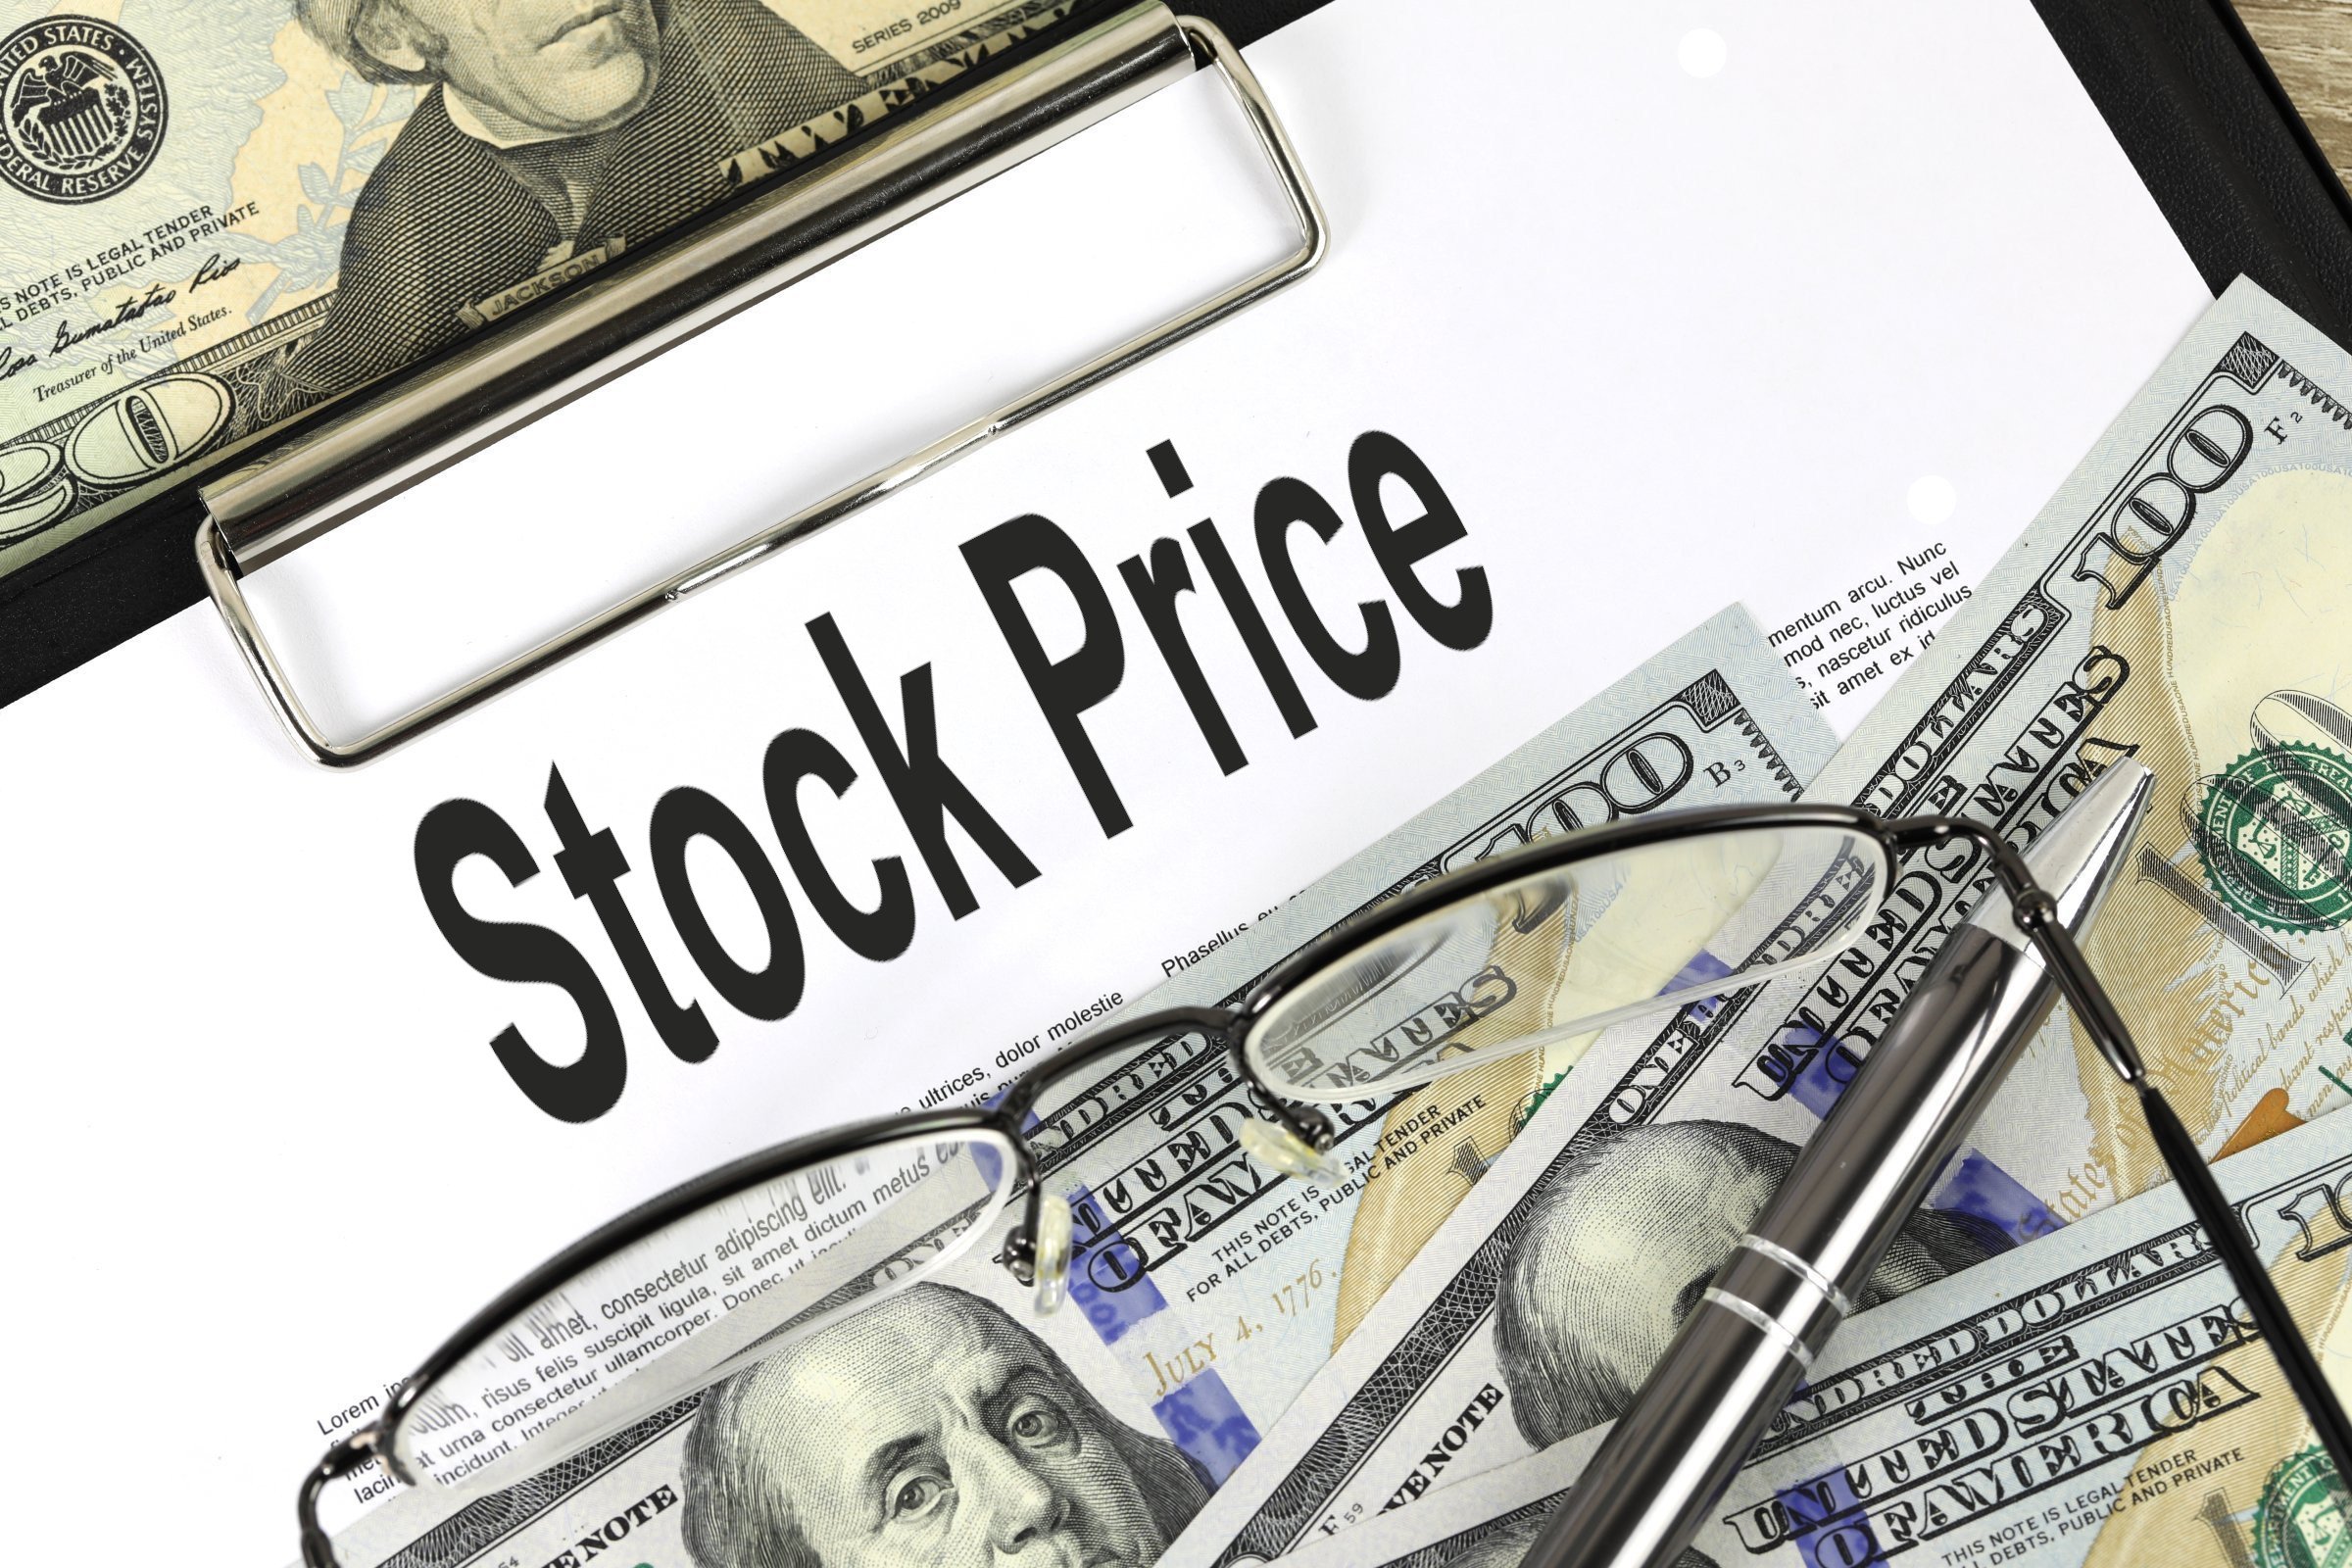 stock price